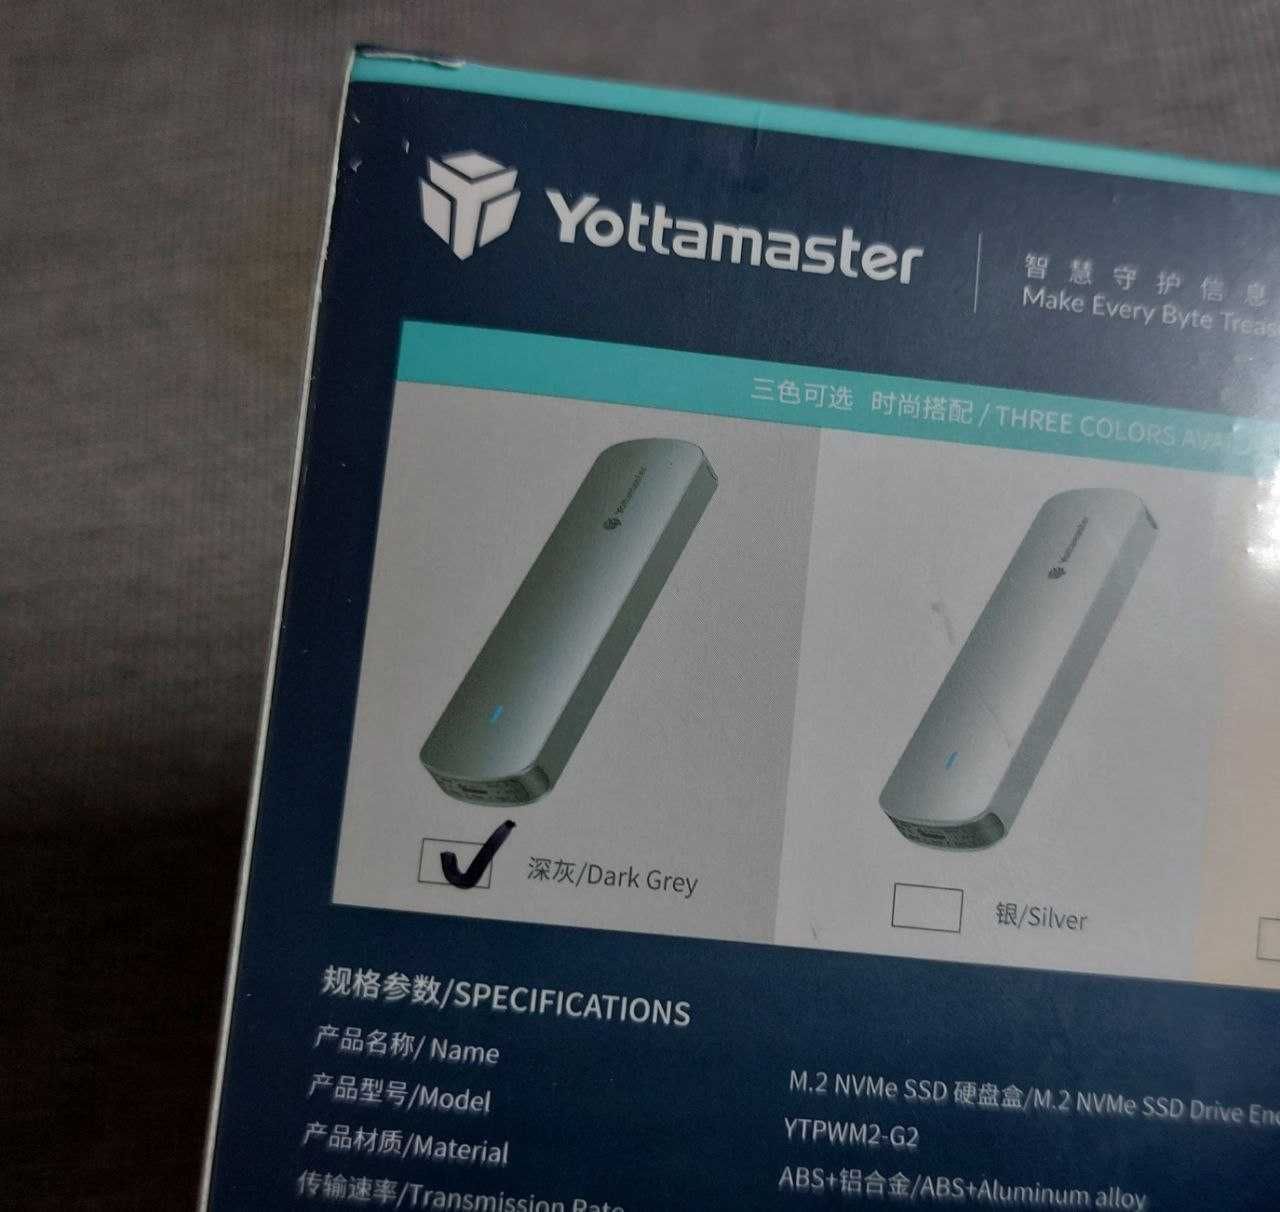 Rack SSD Yottamaster M.2 NVMe 10gbps